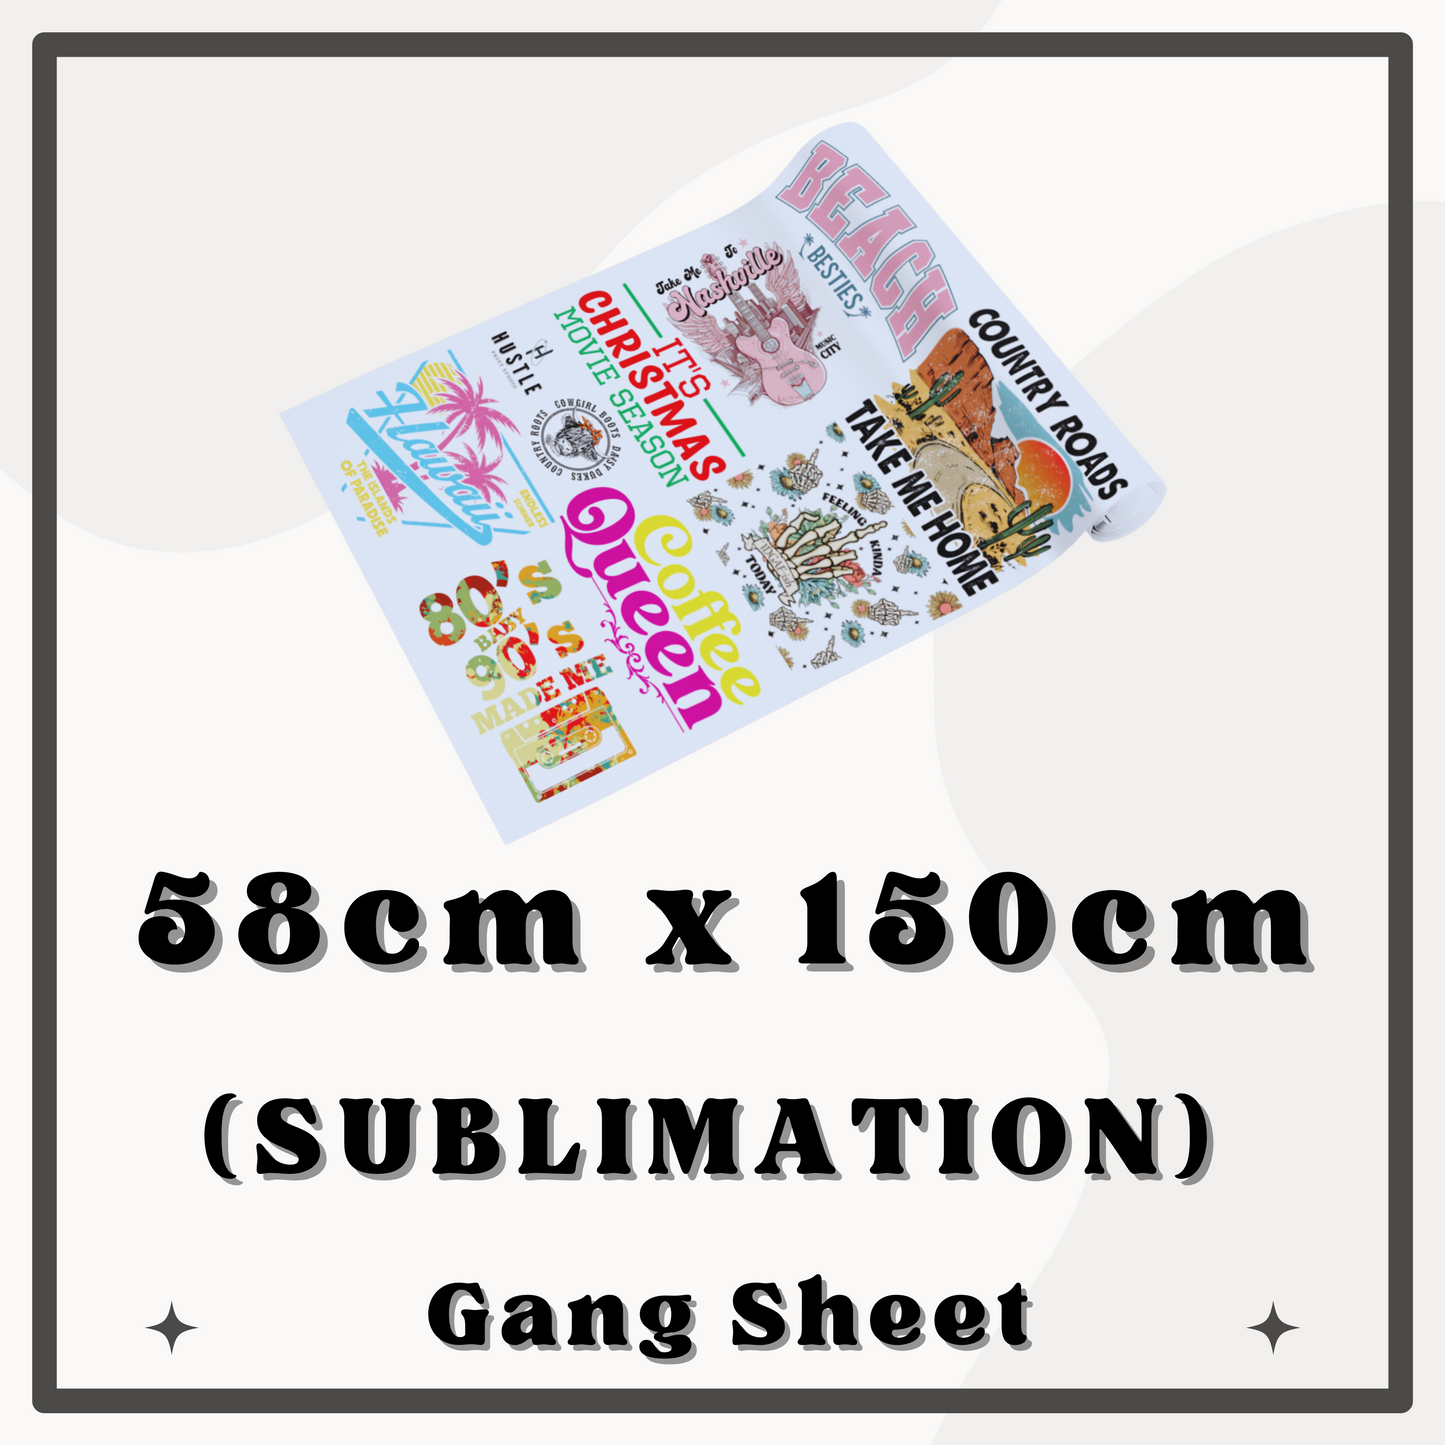 58cm x 150cm Sublimation Gang Sheet